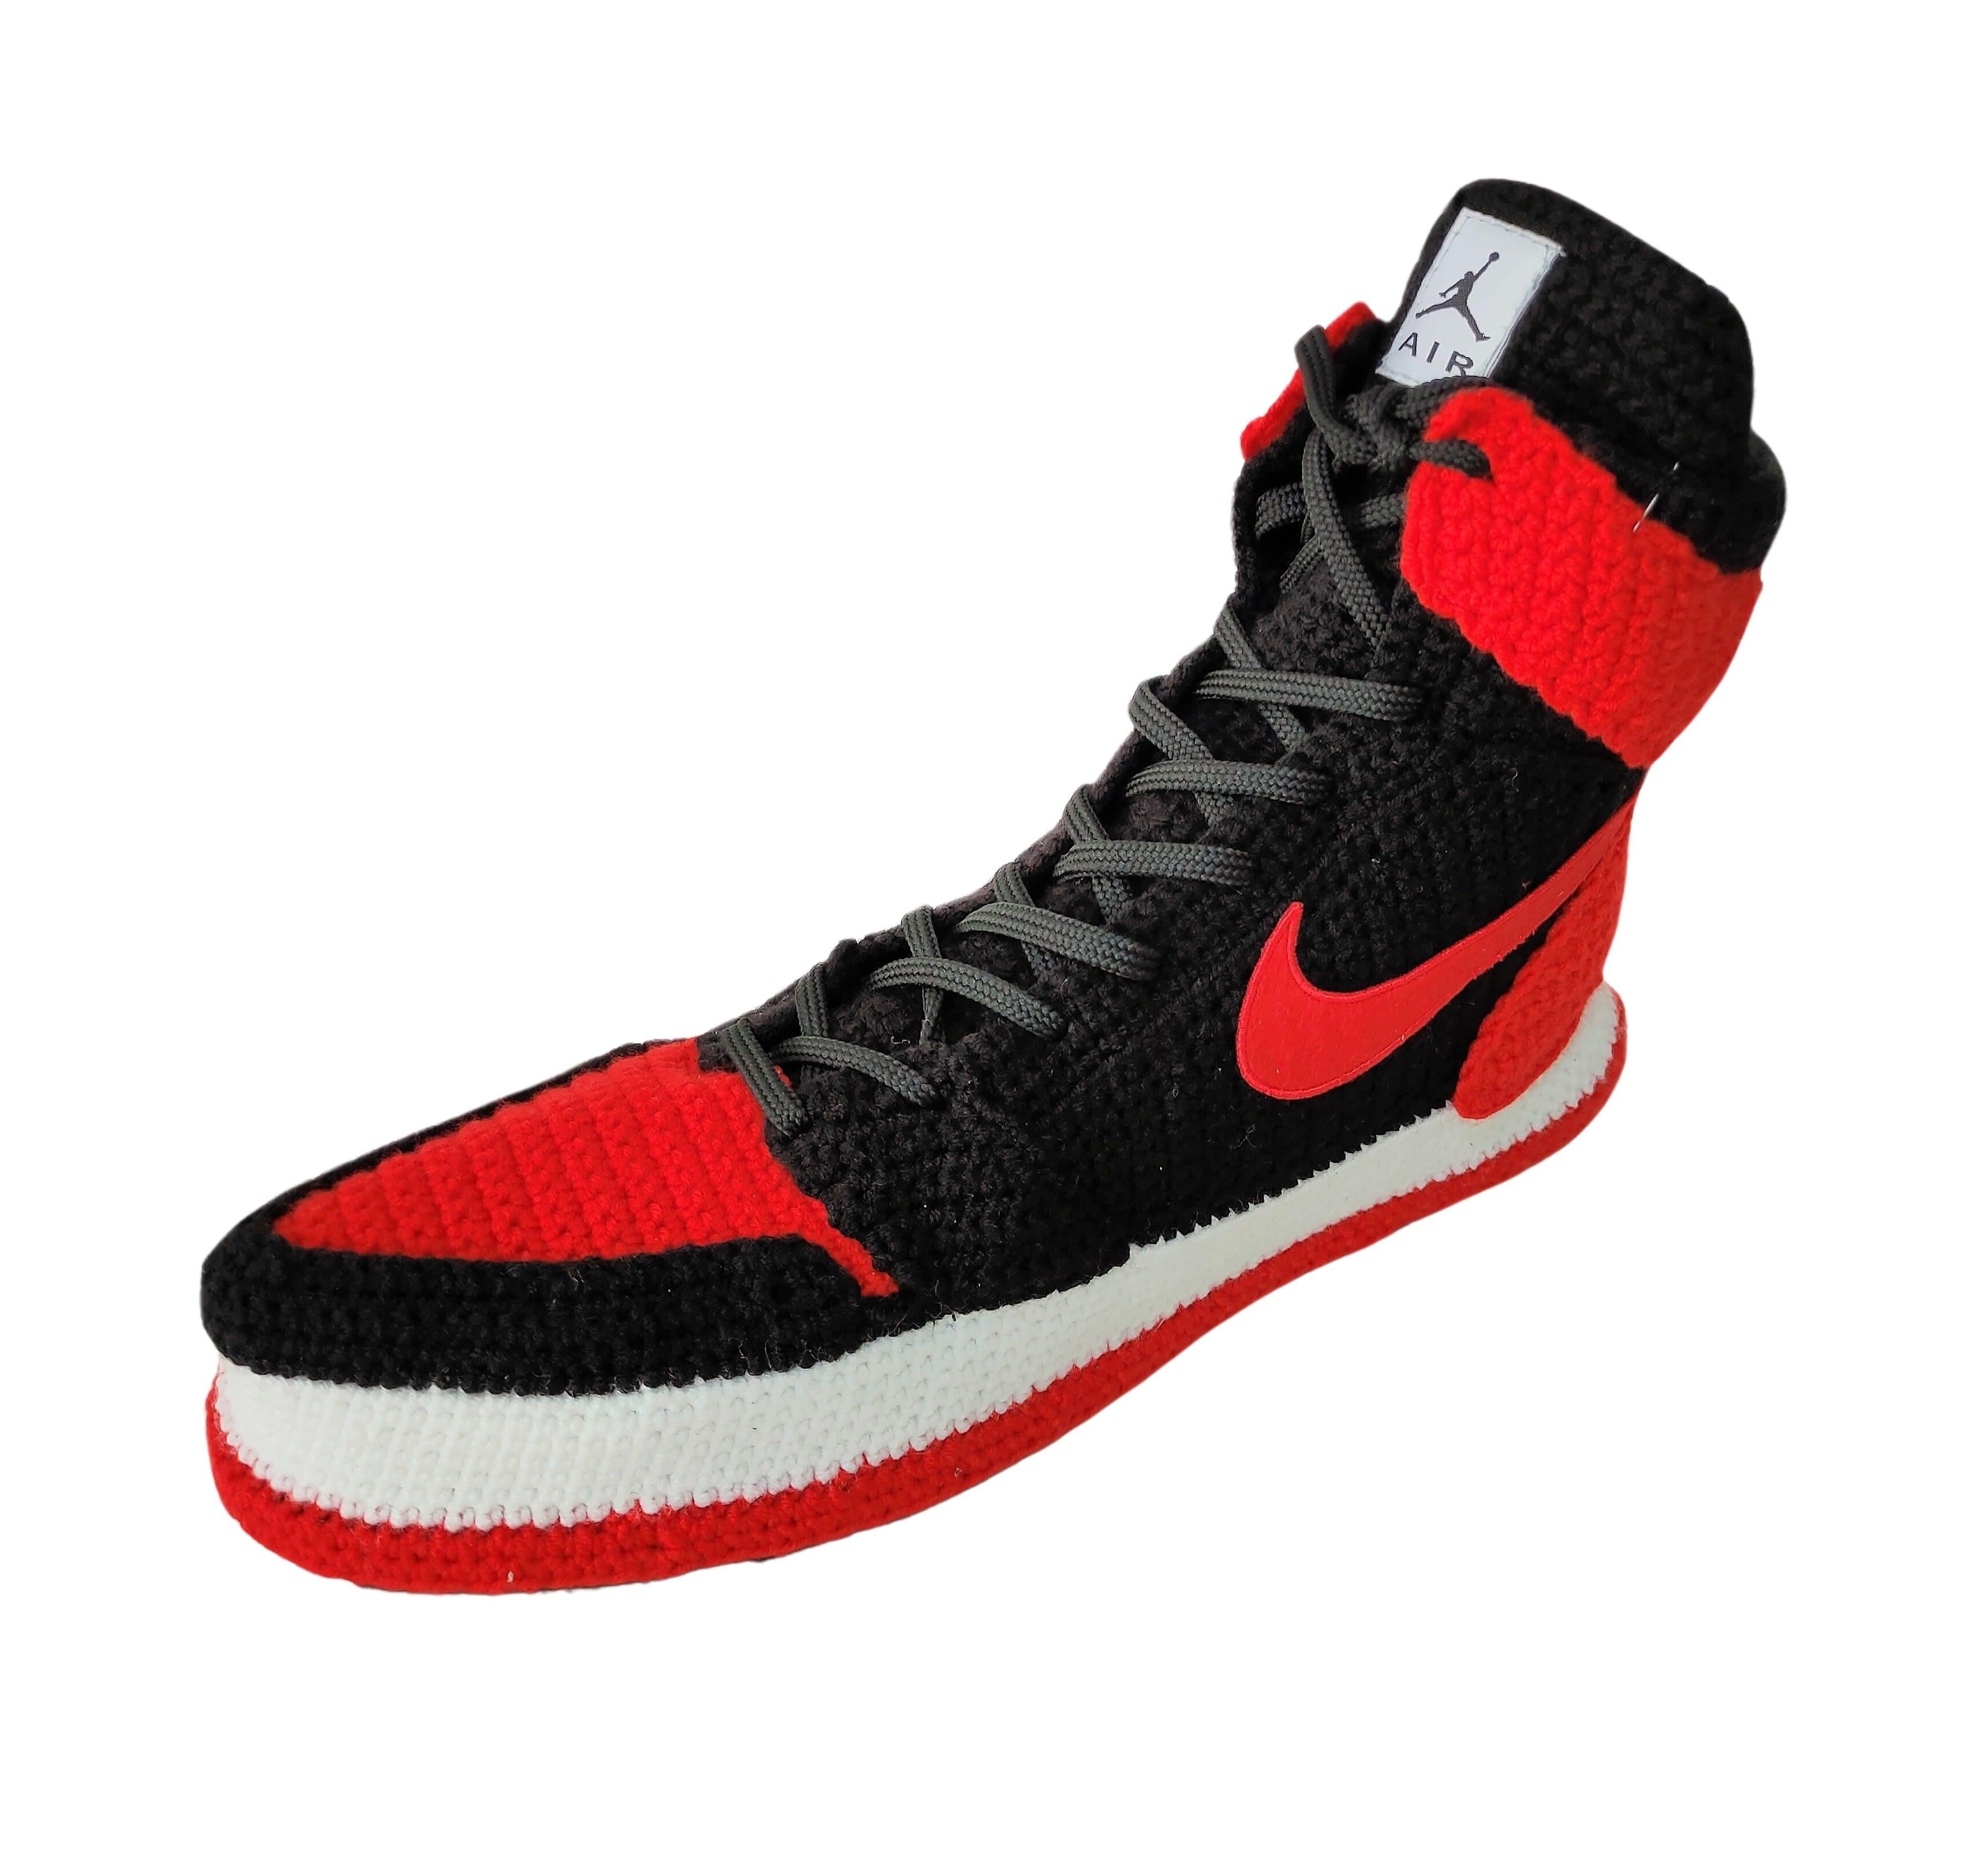 Buy Jordan Look-Alike Sneaker Slippers - Comfy Warm Indoor Plush Kicks For  Lounging - Non-Slip Sole, Funny Unisex Gift For Men & Women - One Size Fits  All - Unisex Indoor Floor